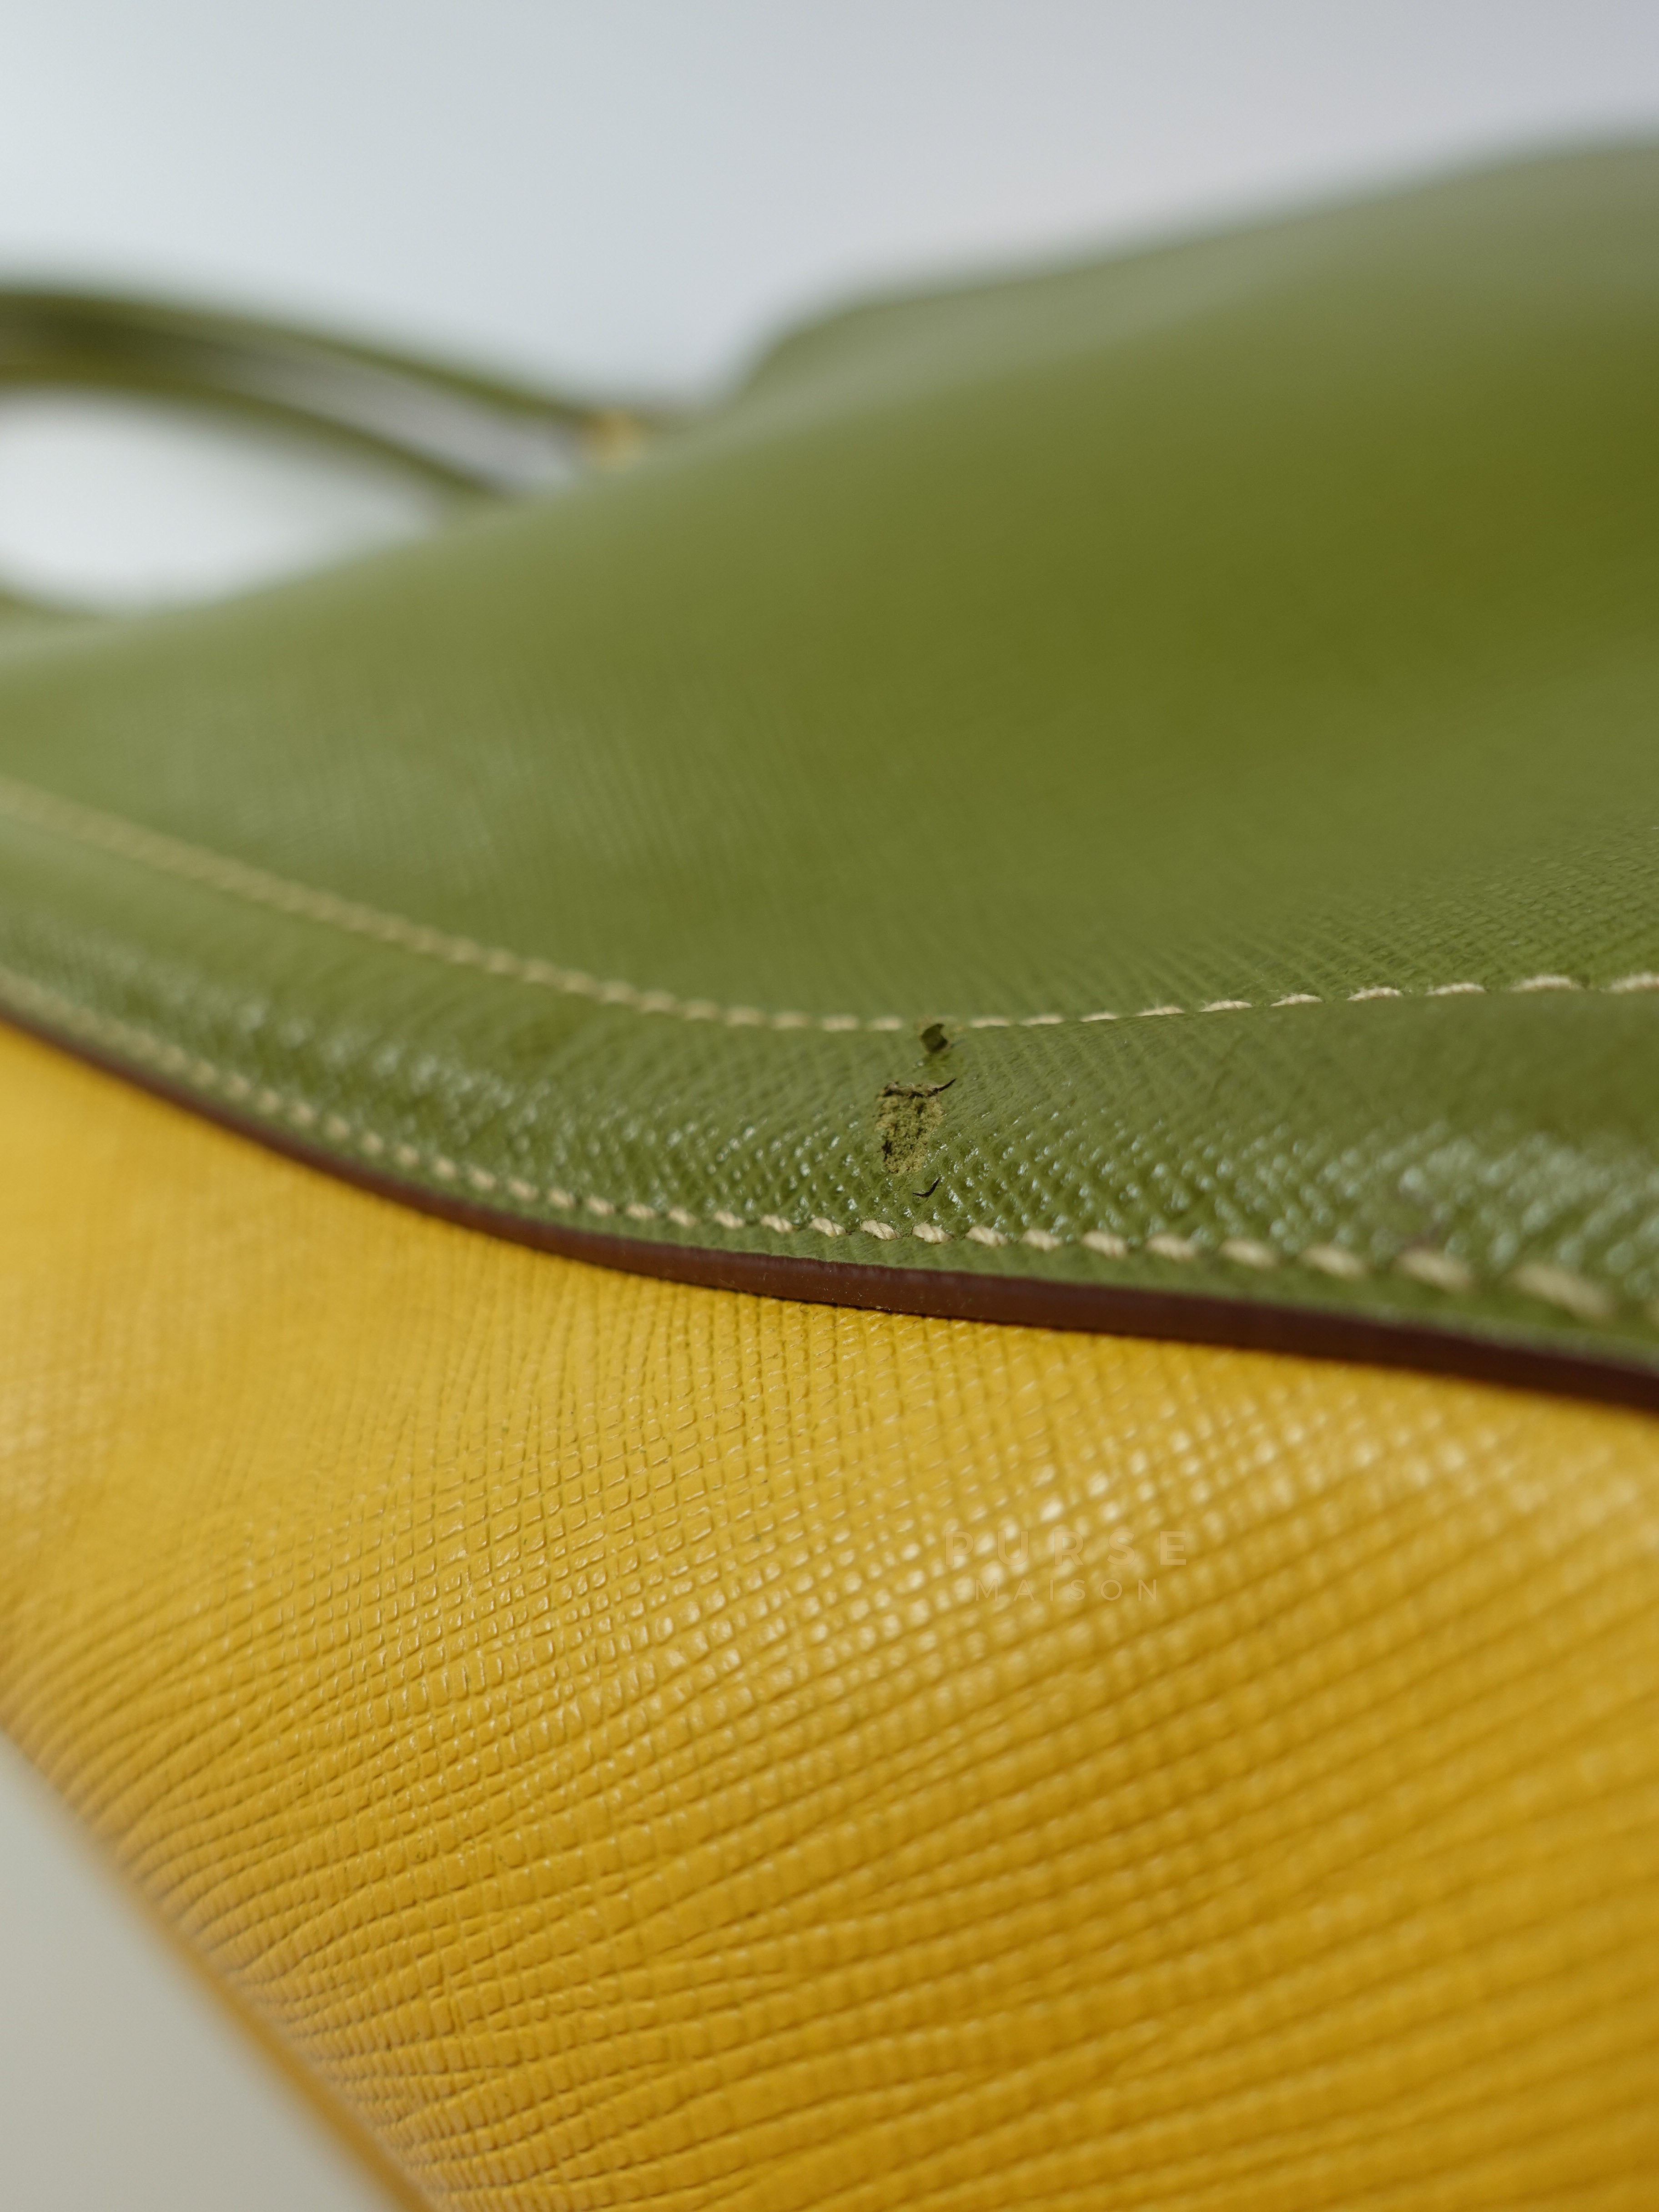 BN2438 Medium Saffiano Lux Bi-color Leather Bag (Green/Yellow) | Purse Maison Luxury Bags Shop